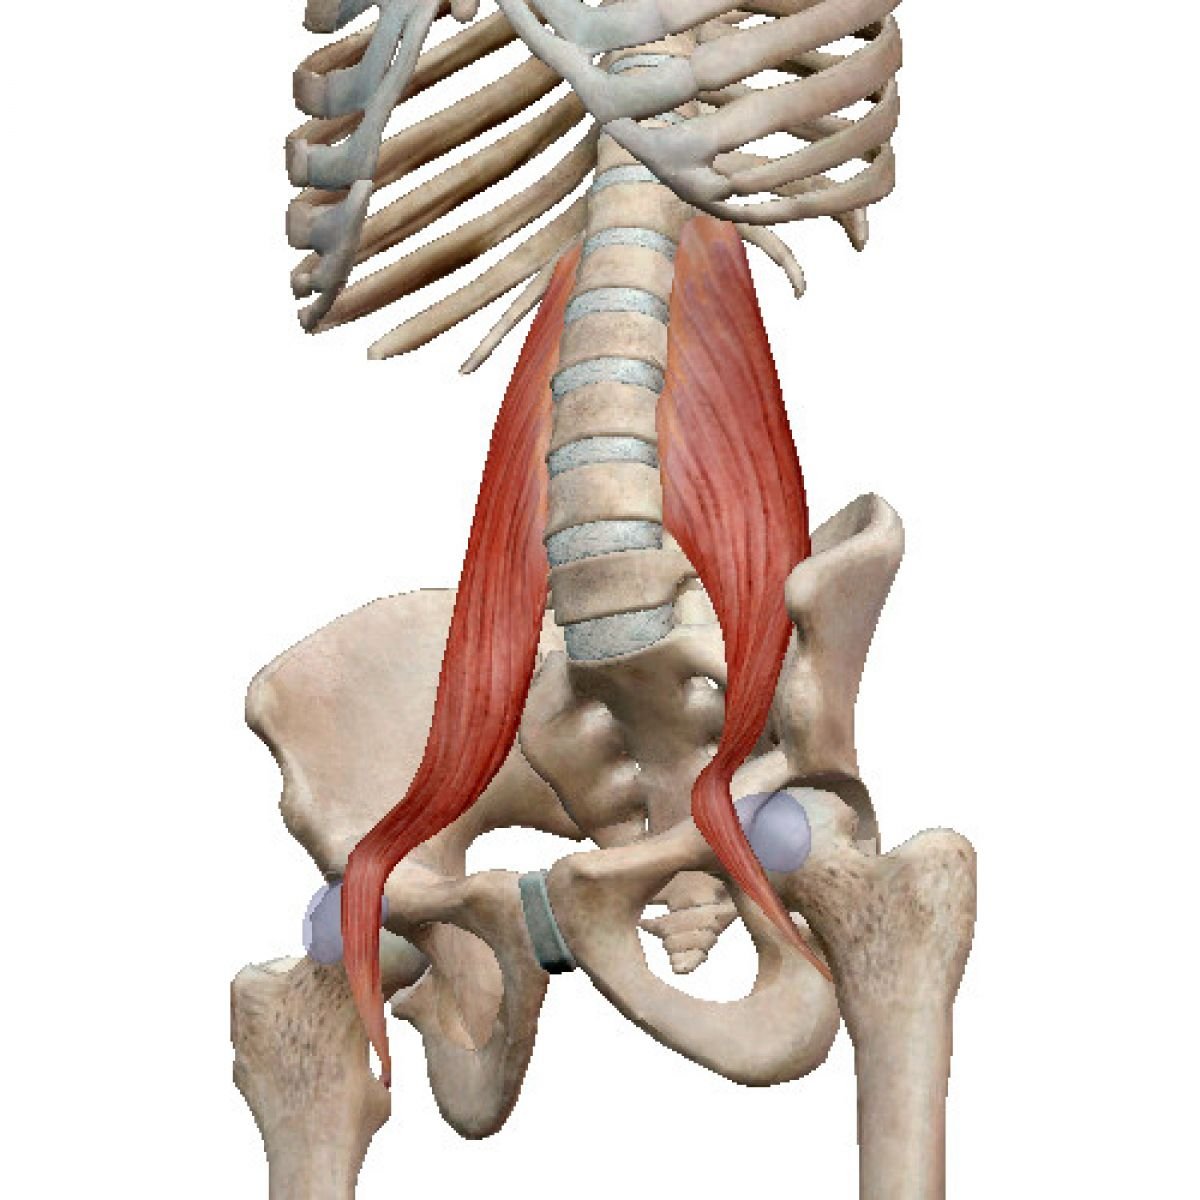 Multifidus muscle анатомия